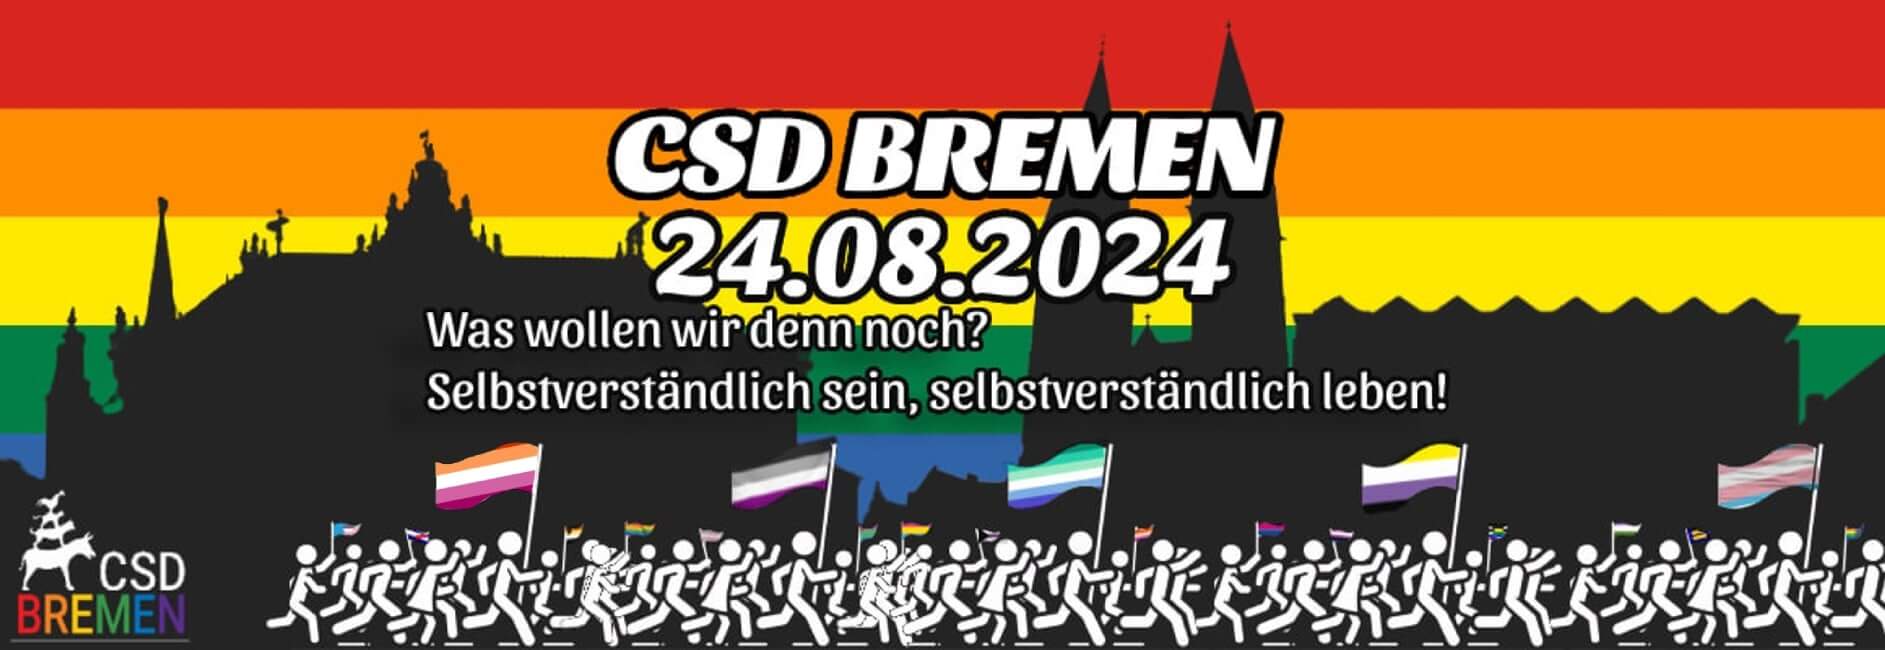 (c) Csd-bremen.org